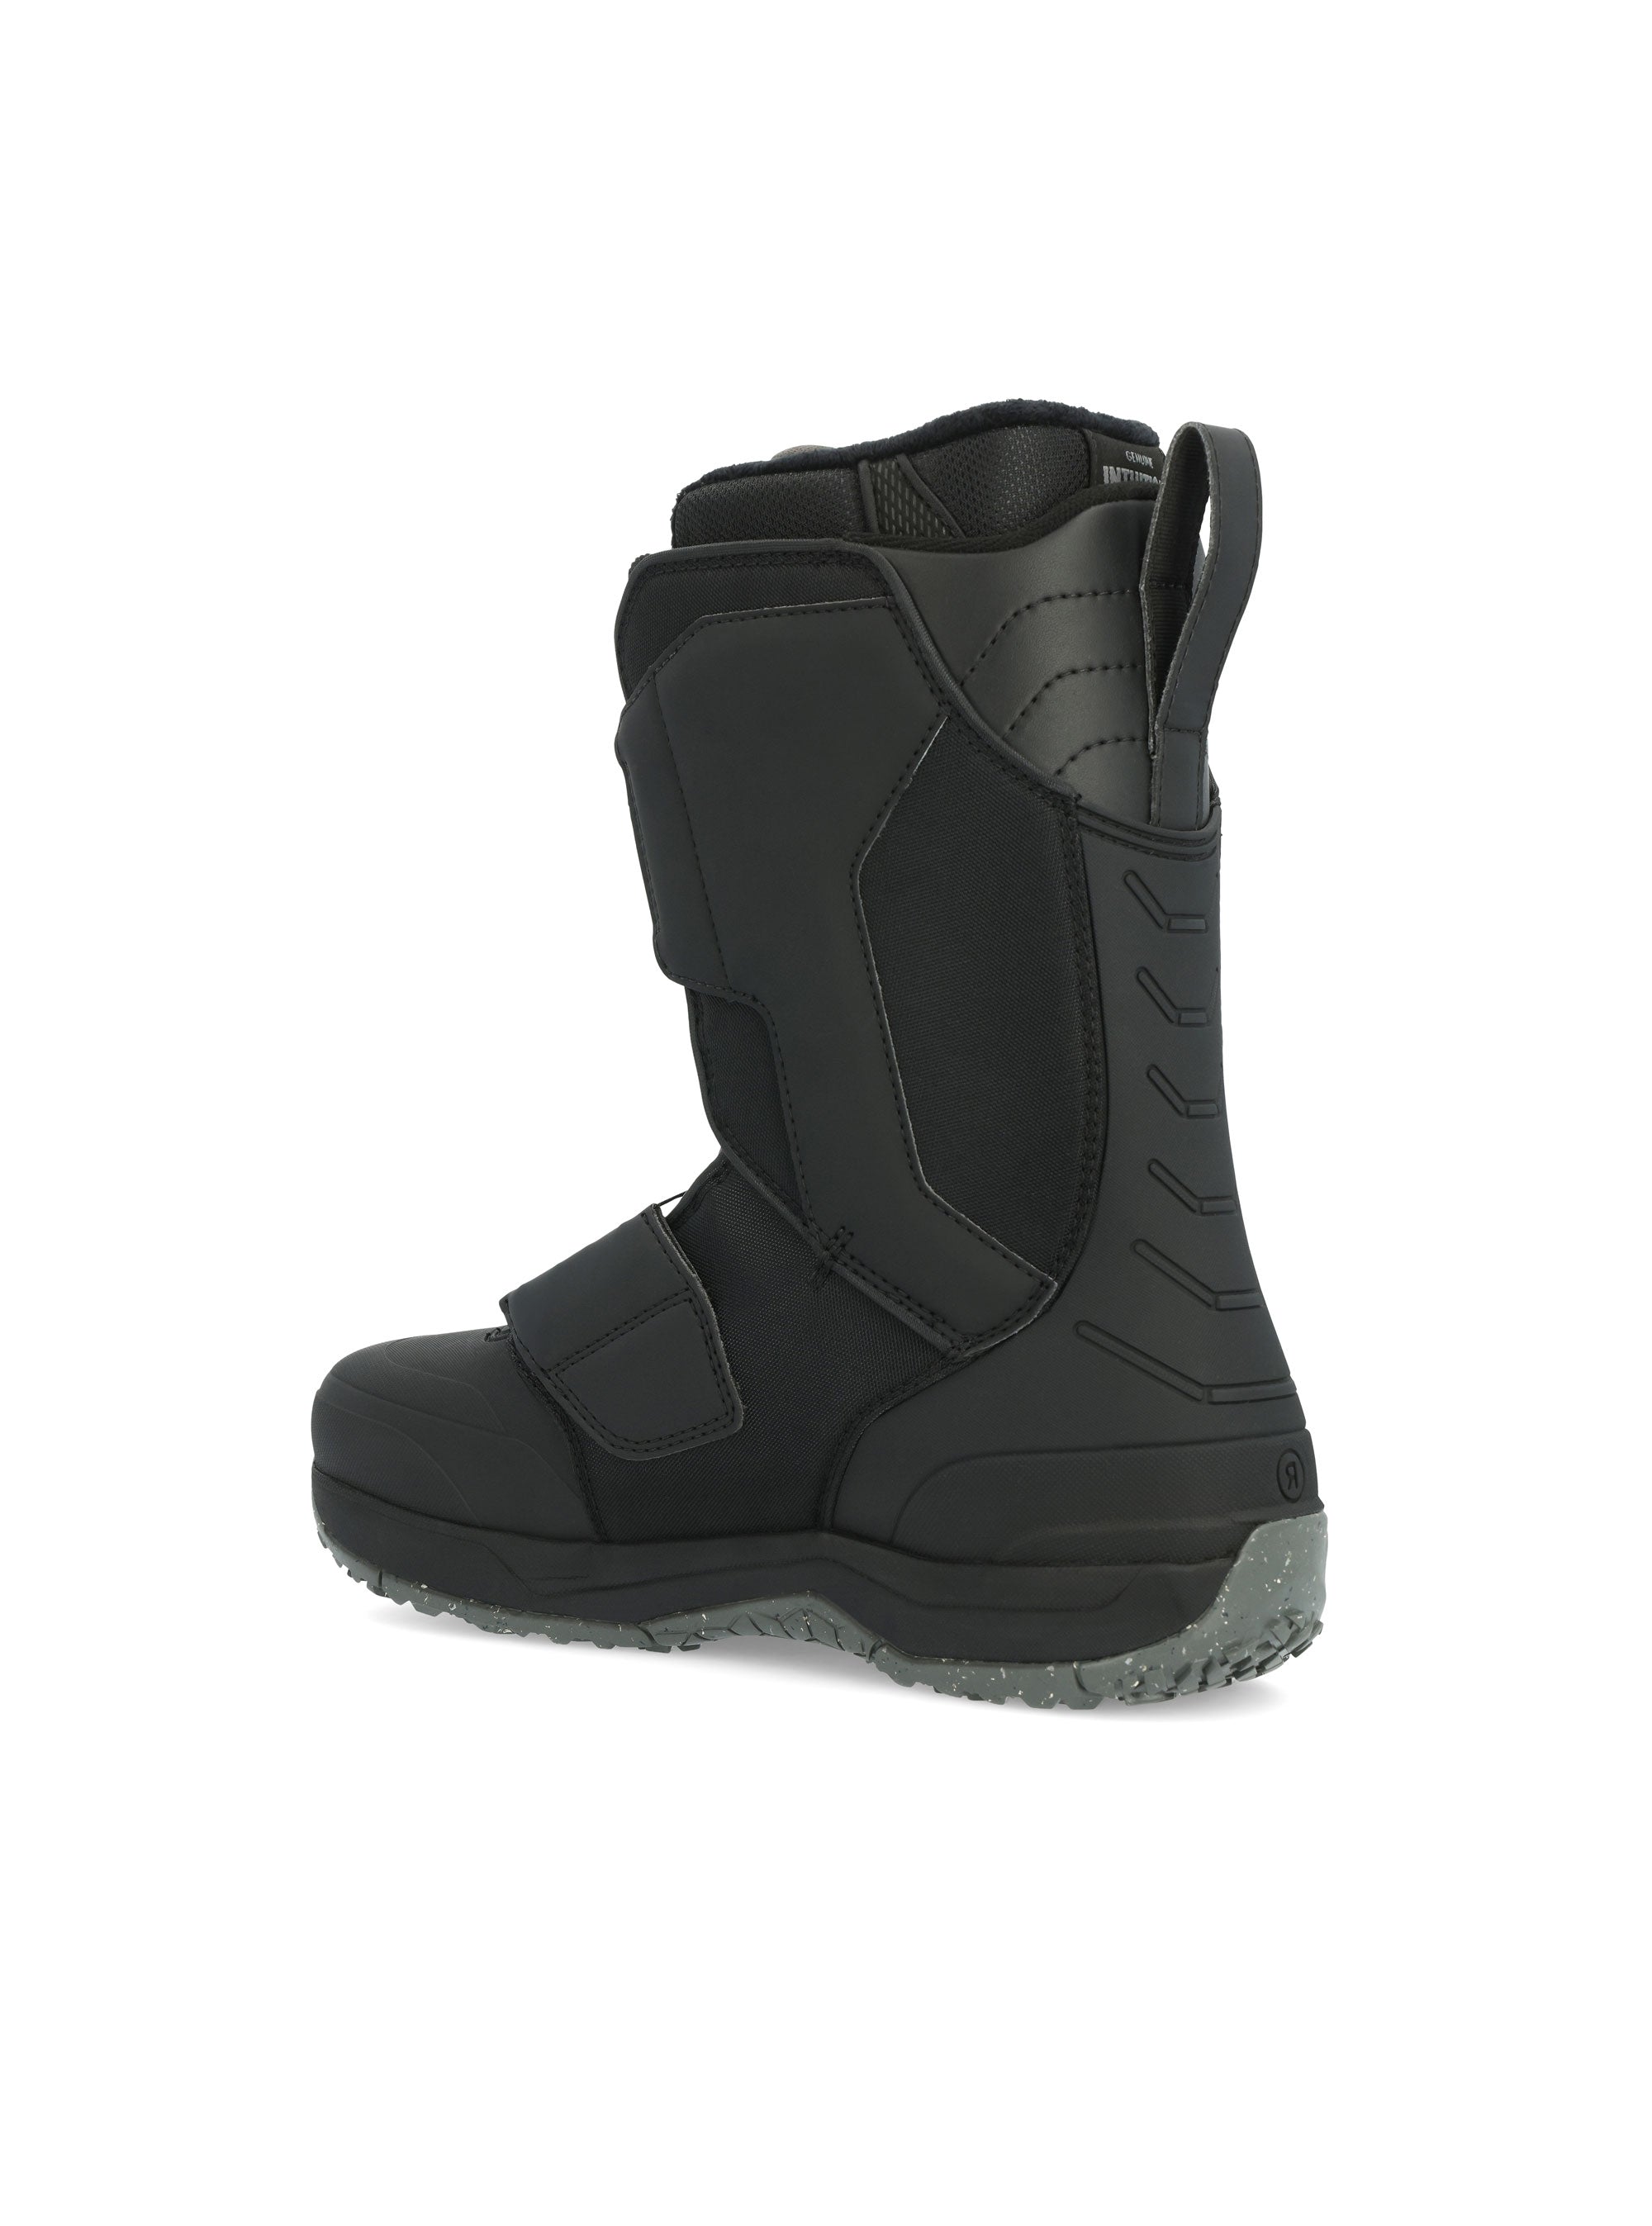 Insano Snowboard Boots